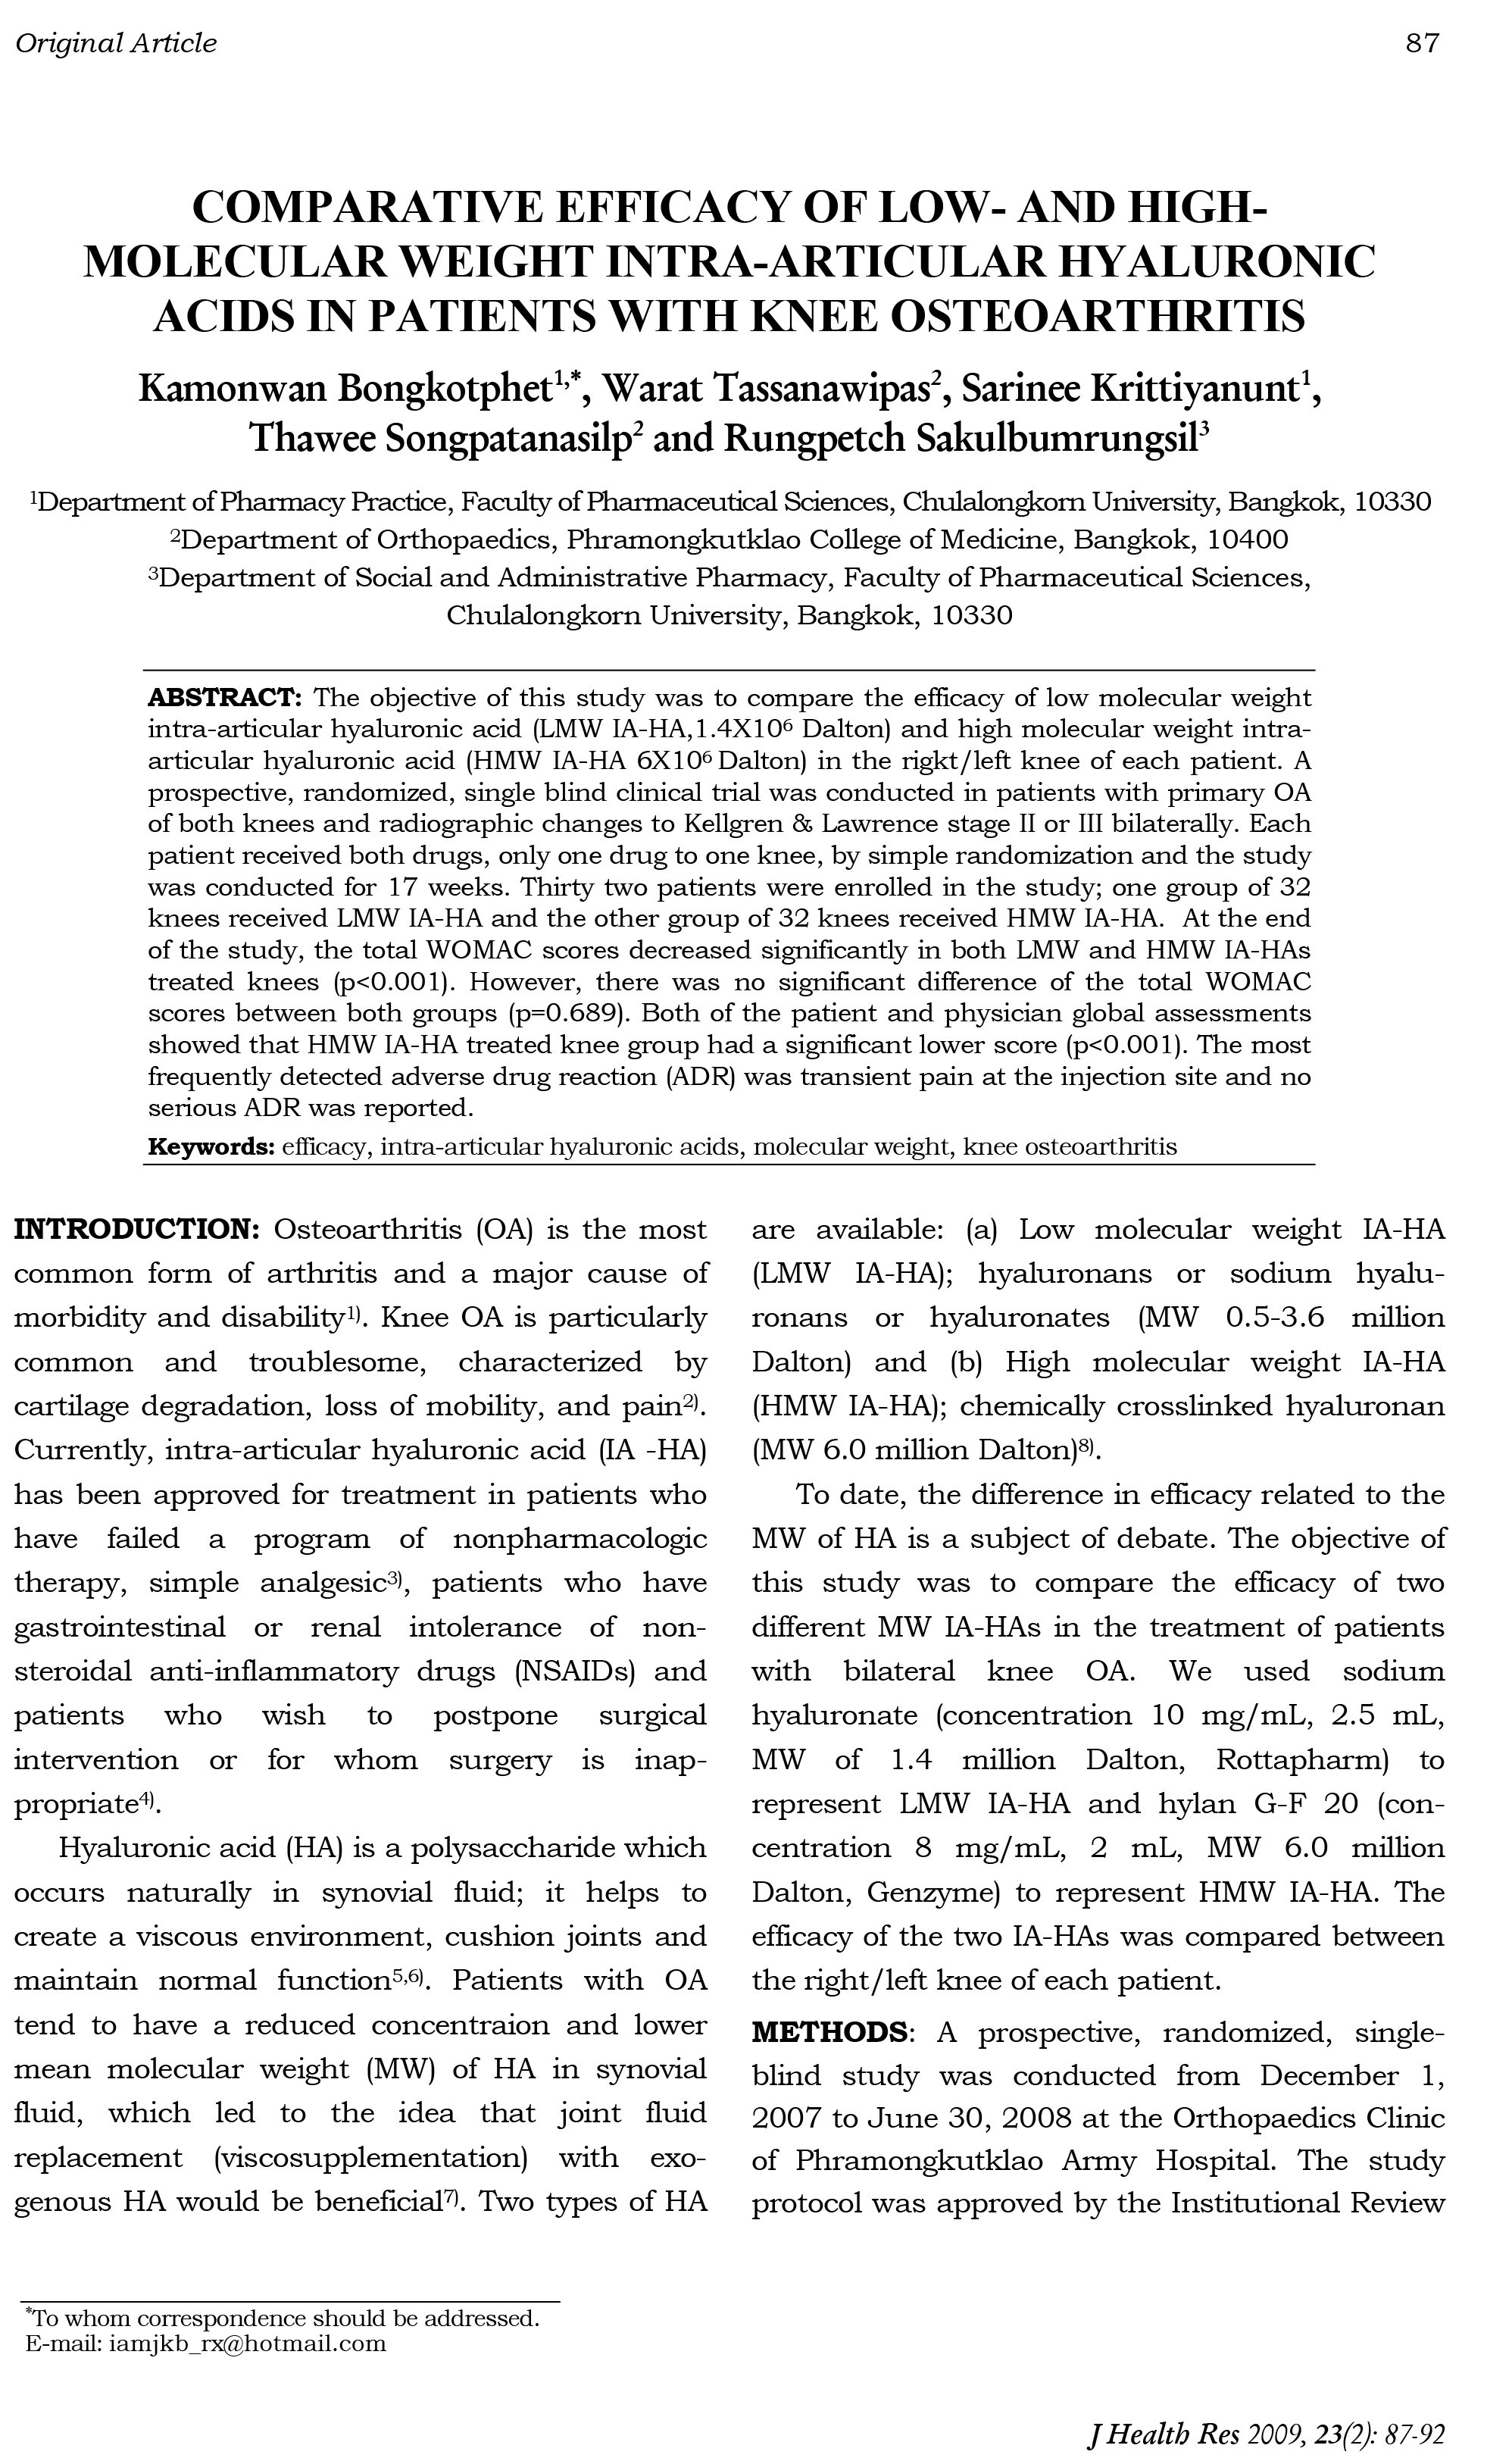 Comparativeefficacyoflow-andhigh-molecularweightintra-articularhyaluronicacidsinpatientswithkneeosteoarthritis-2.jpg